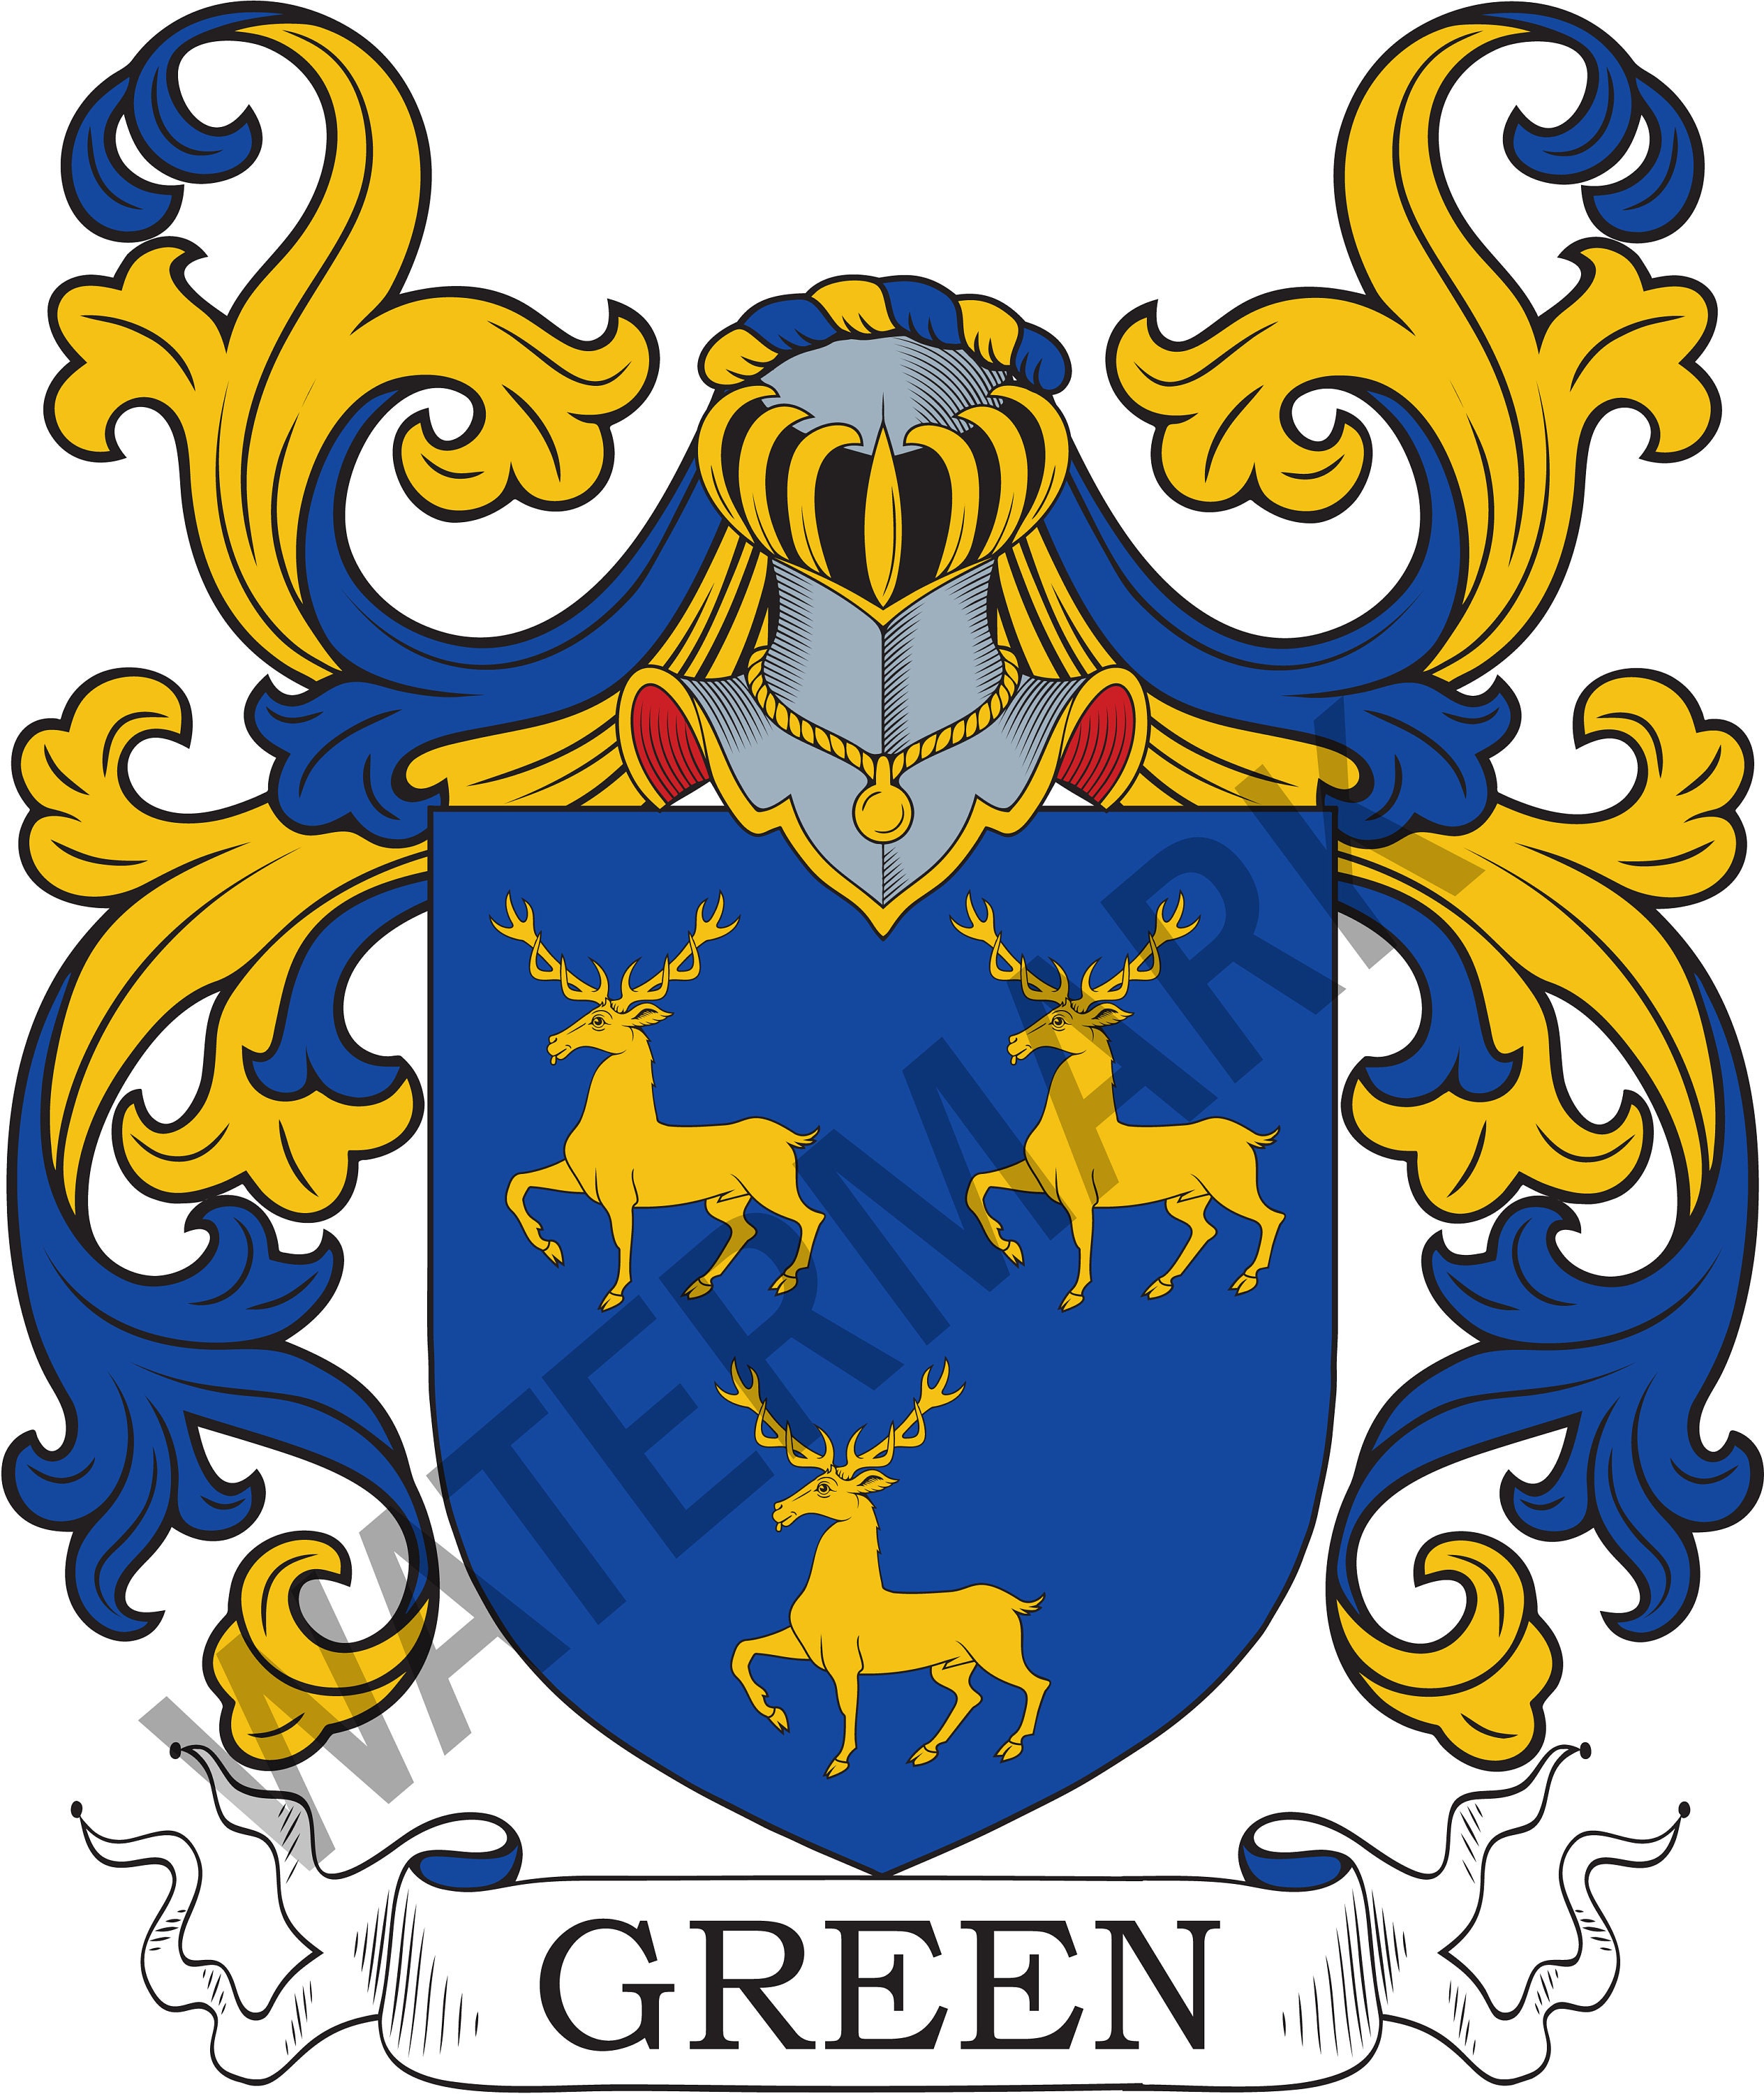 Green Family Crest - Digital Download - Green Coat of Arms JPG File -  Heraldry, Genealogy, Ancestry, Surnames, Shields